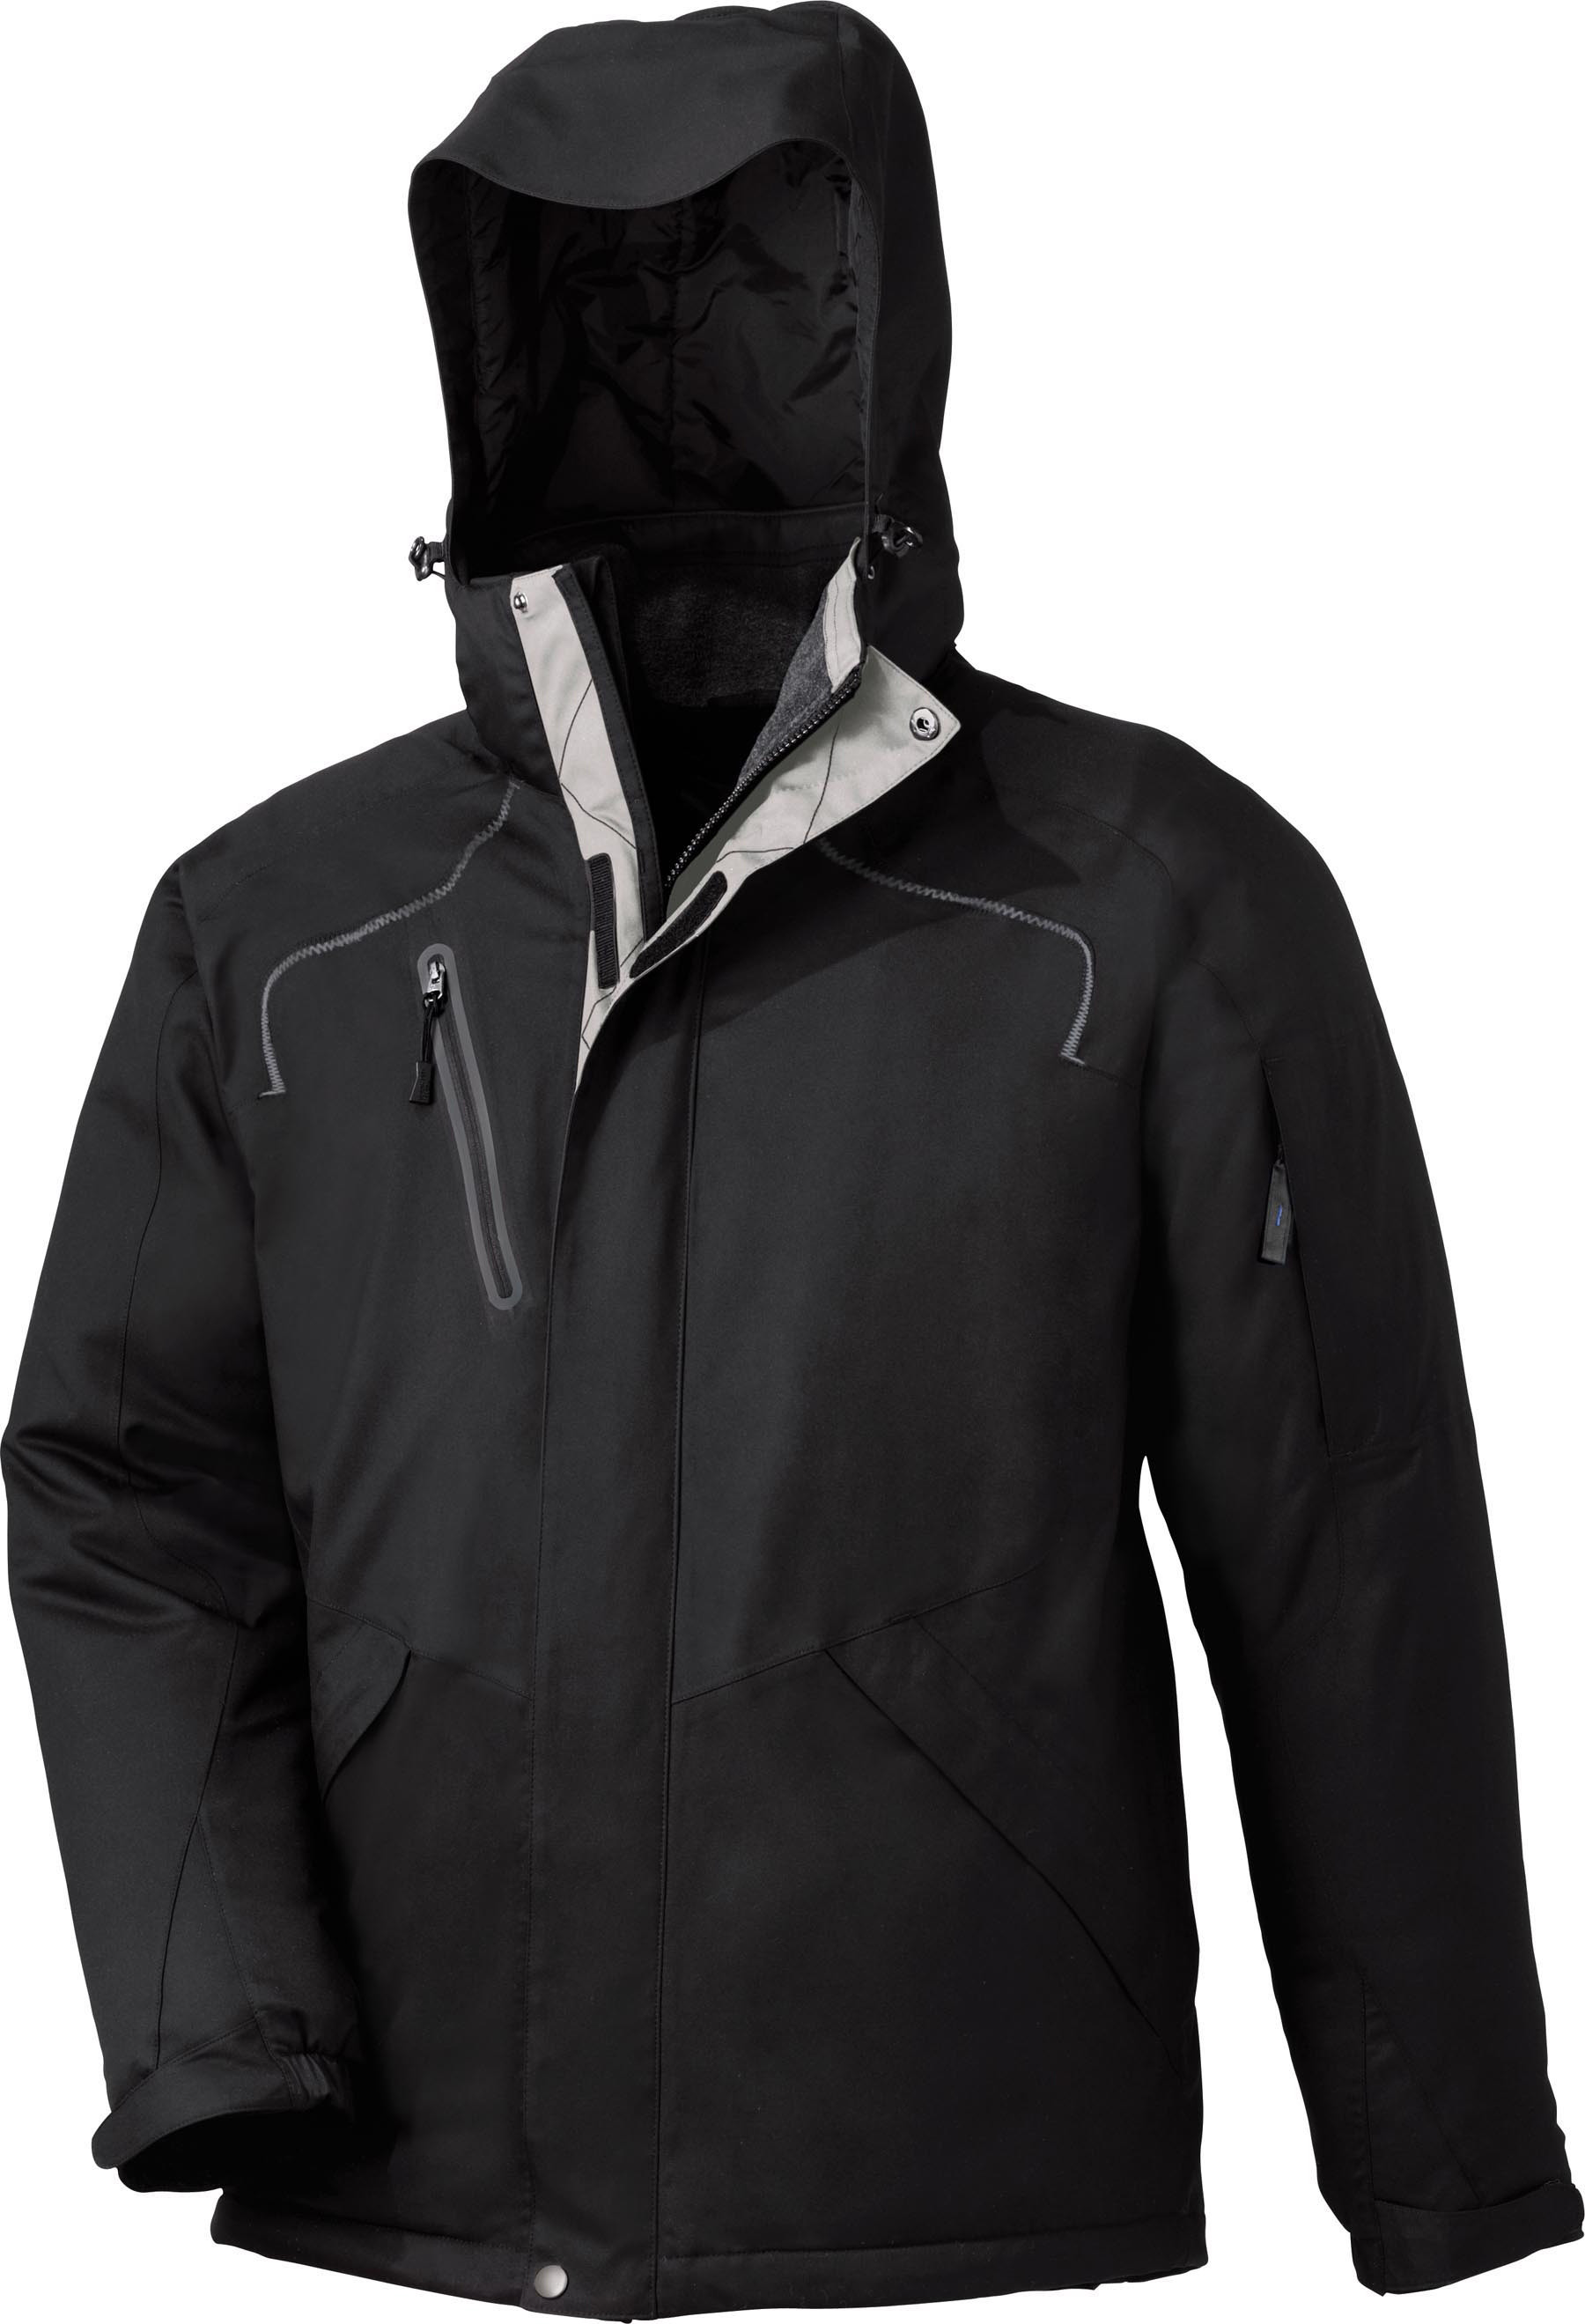 Ash City UTK 2 Warm.Logik 88651 - Men's Sherpa Fleece Lined Seam-Sealed Jacket